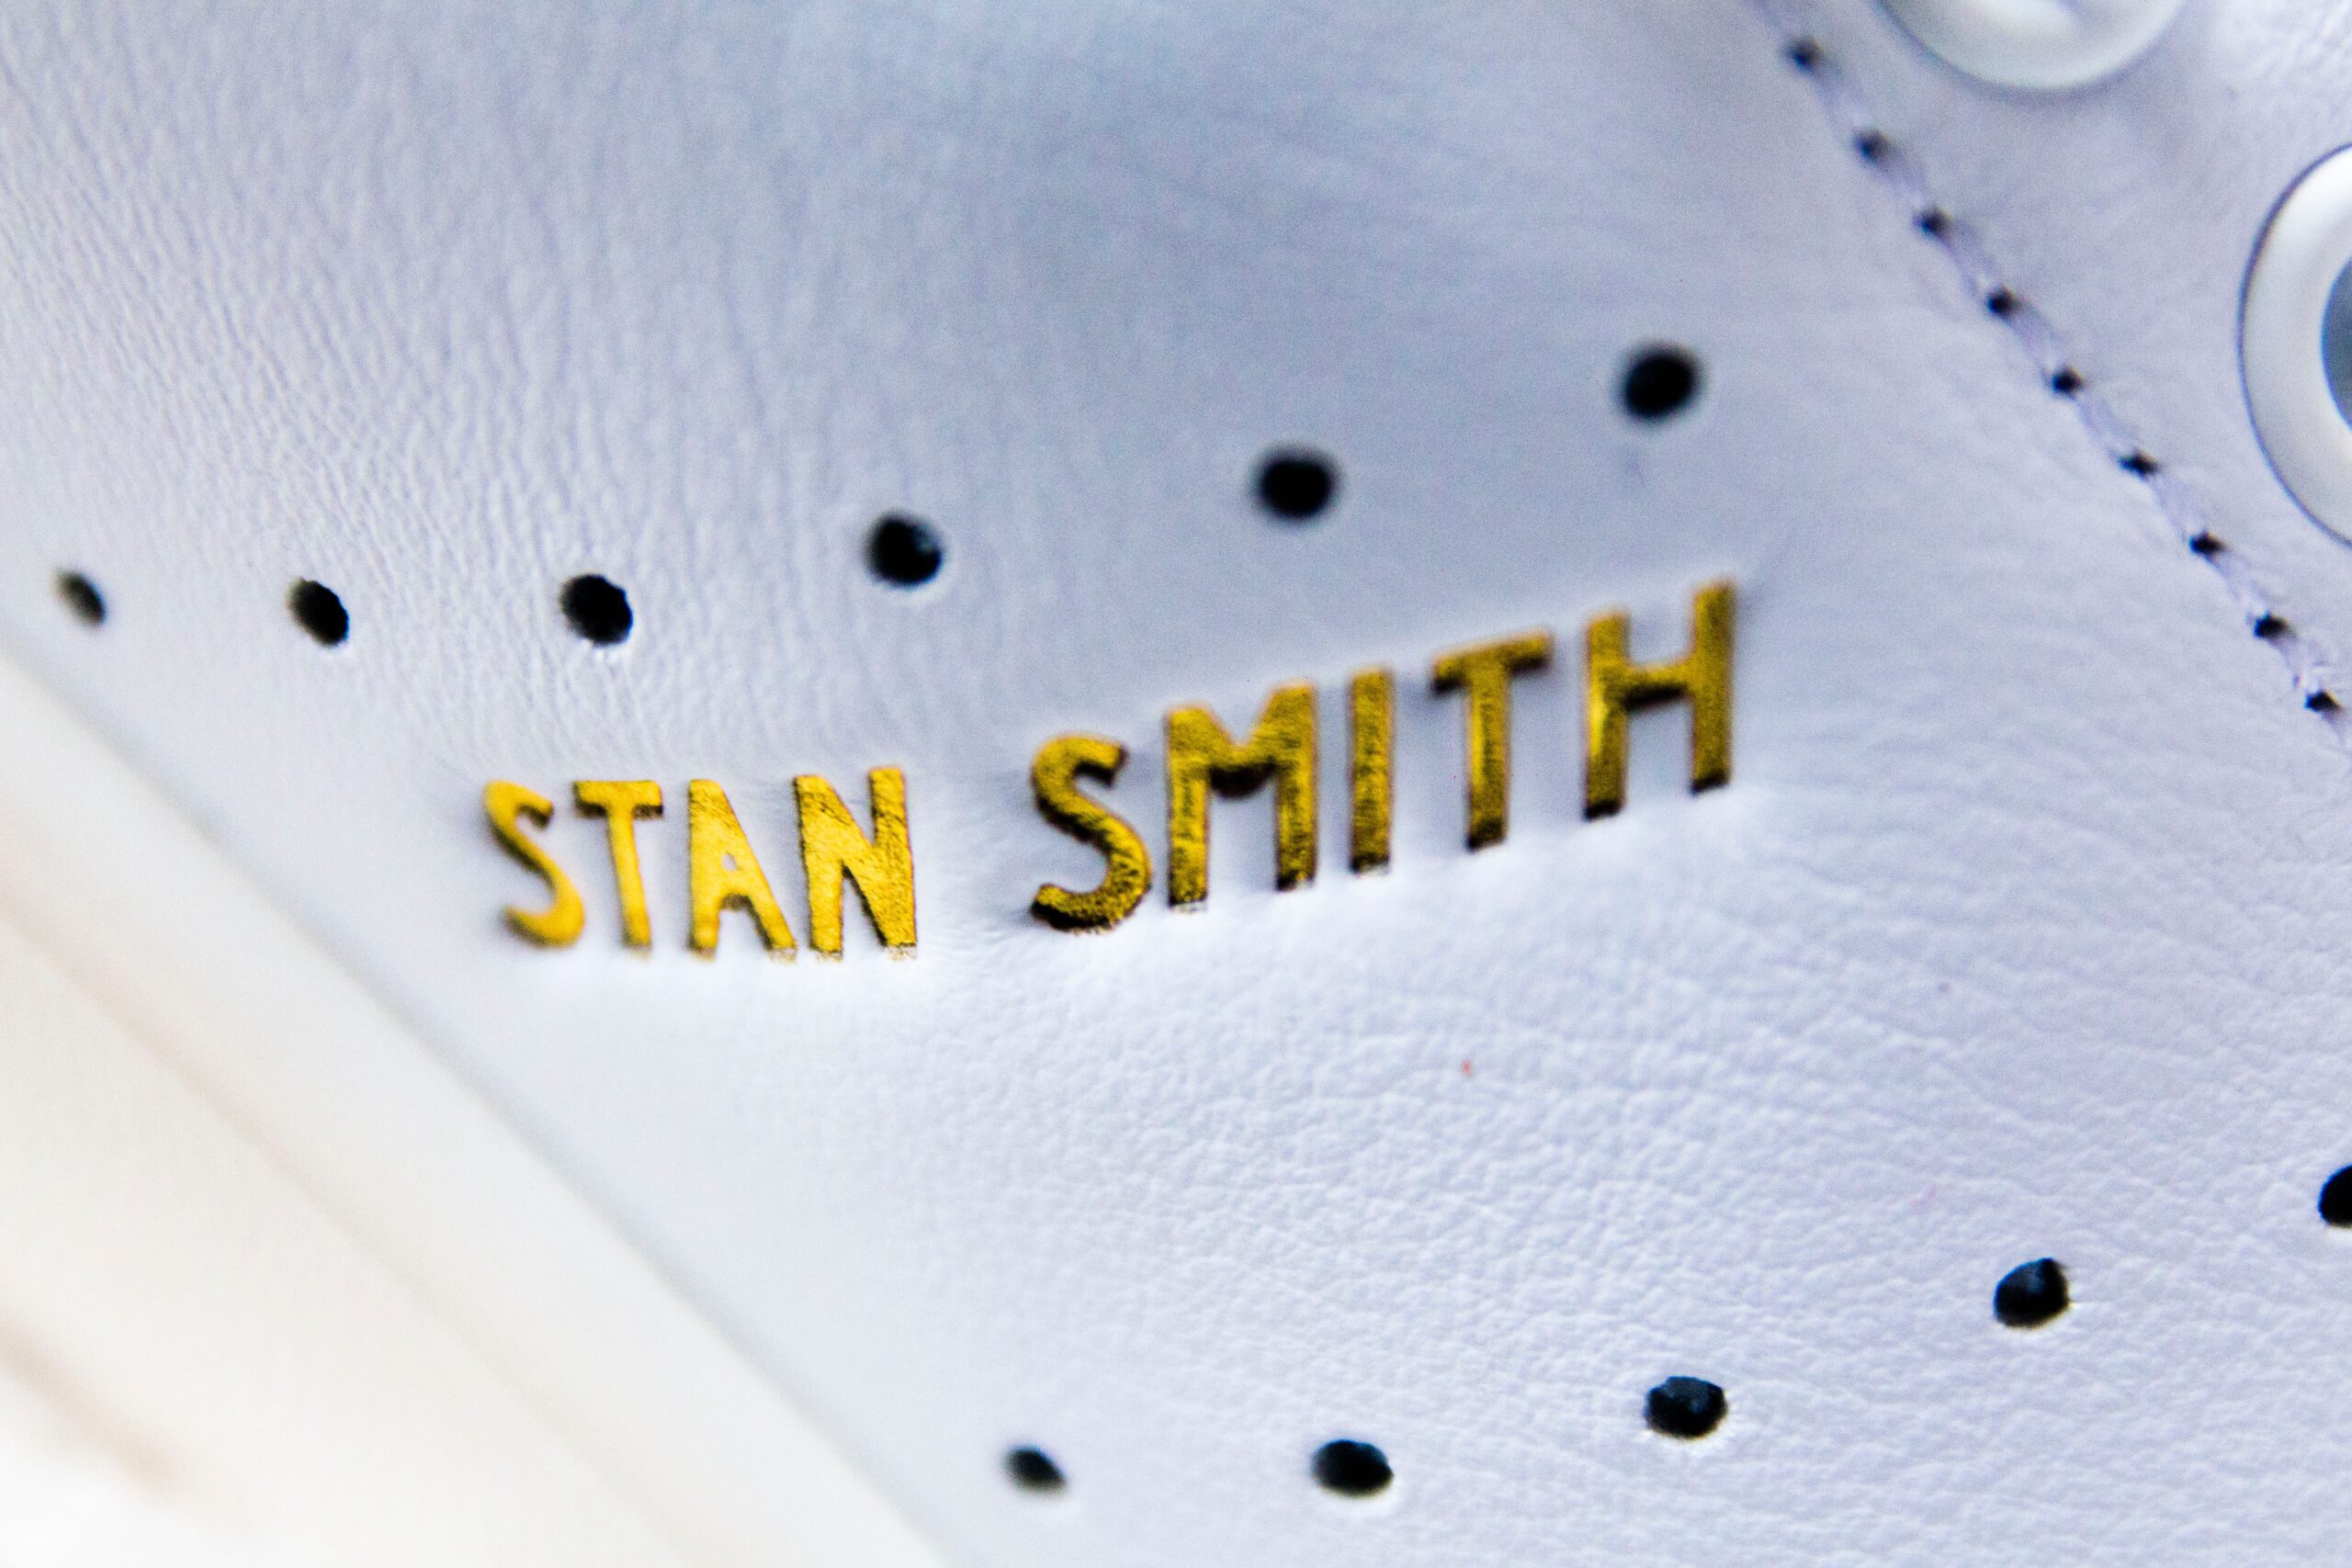 Stan Smith sneaker